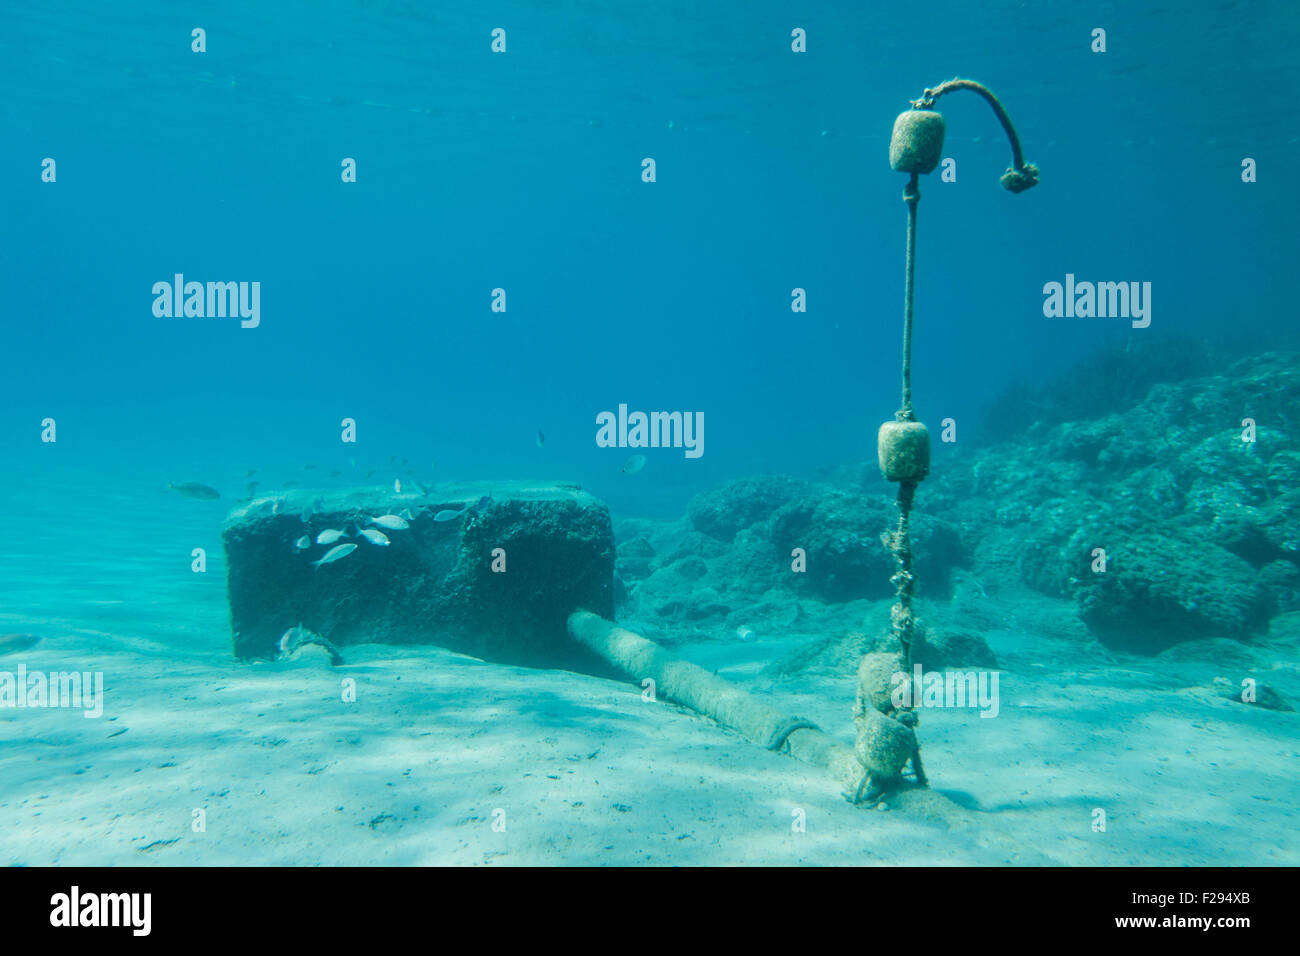 Rope floating underwater Stock Photo